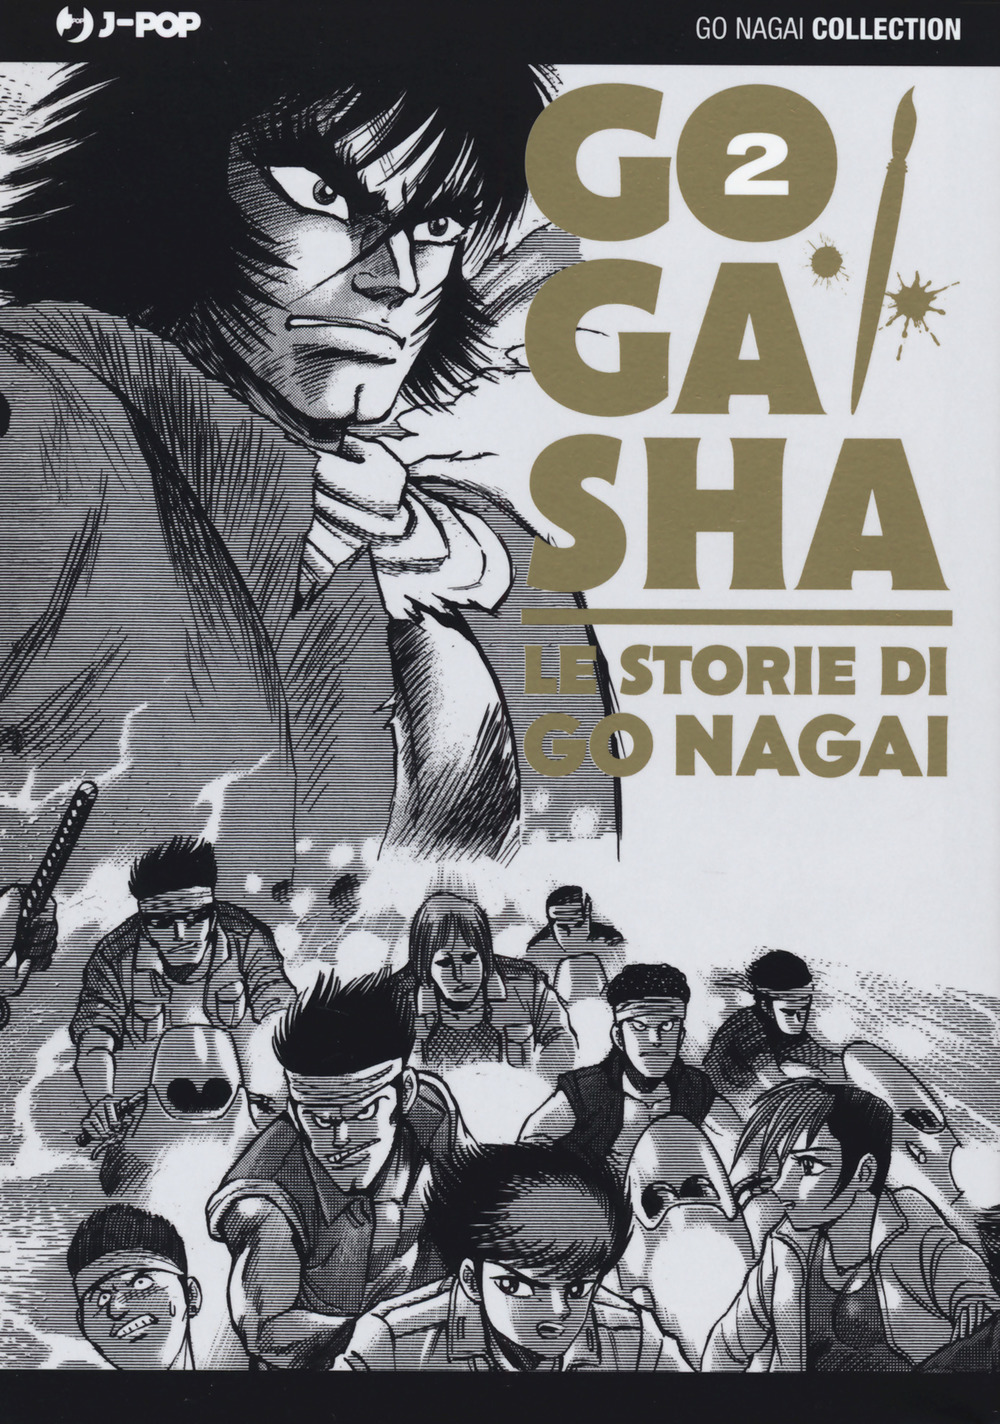 Gogasha. Le storie di Go Nagai. Vol. 2